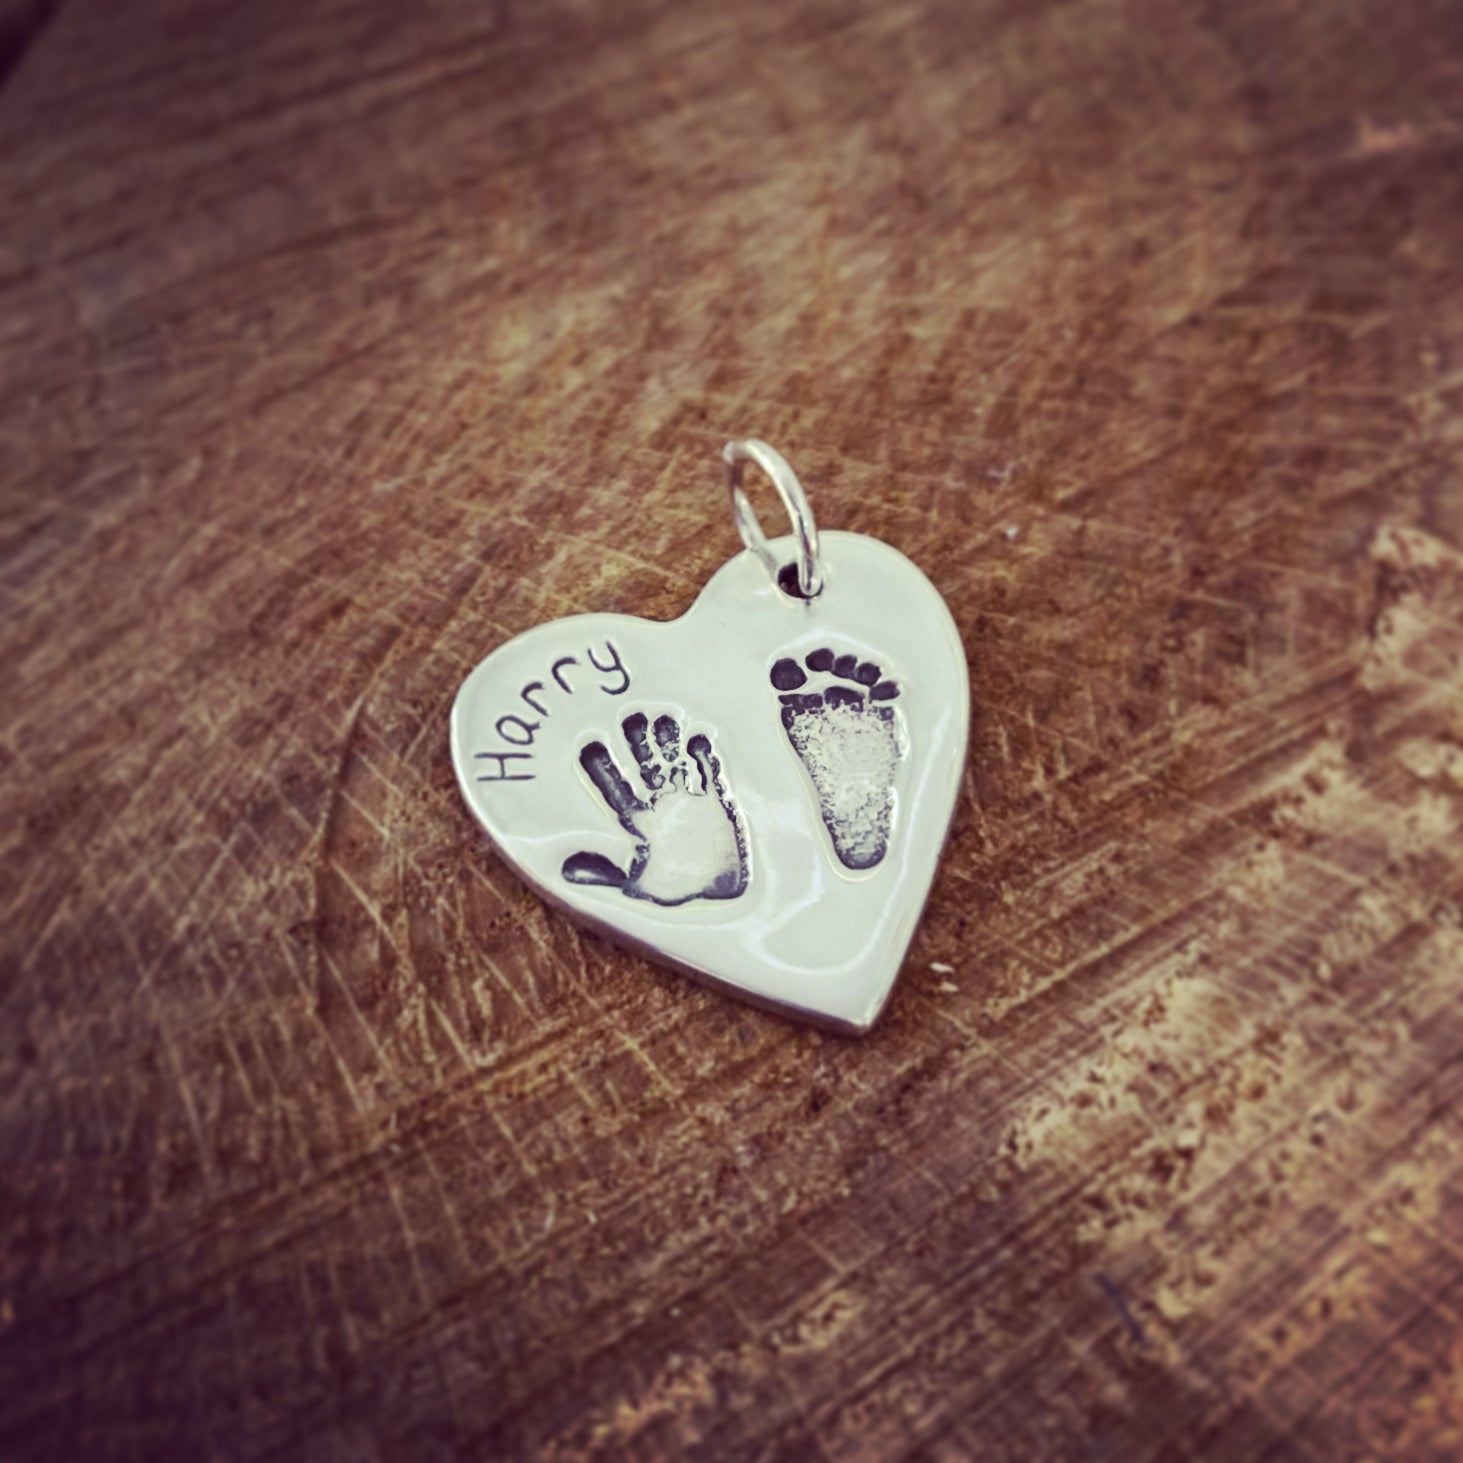 hand & foot print heart pendant